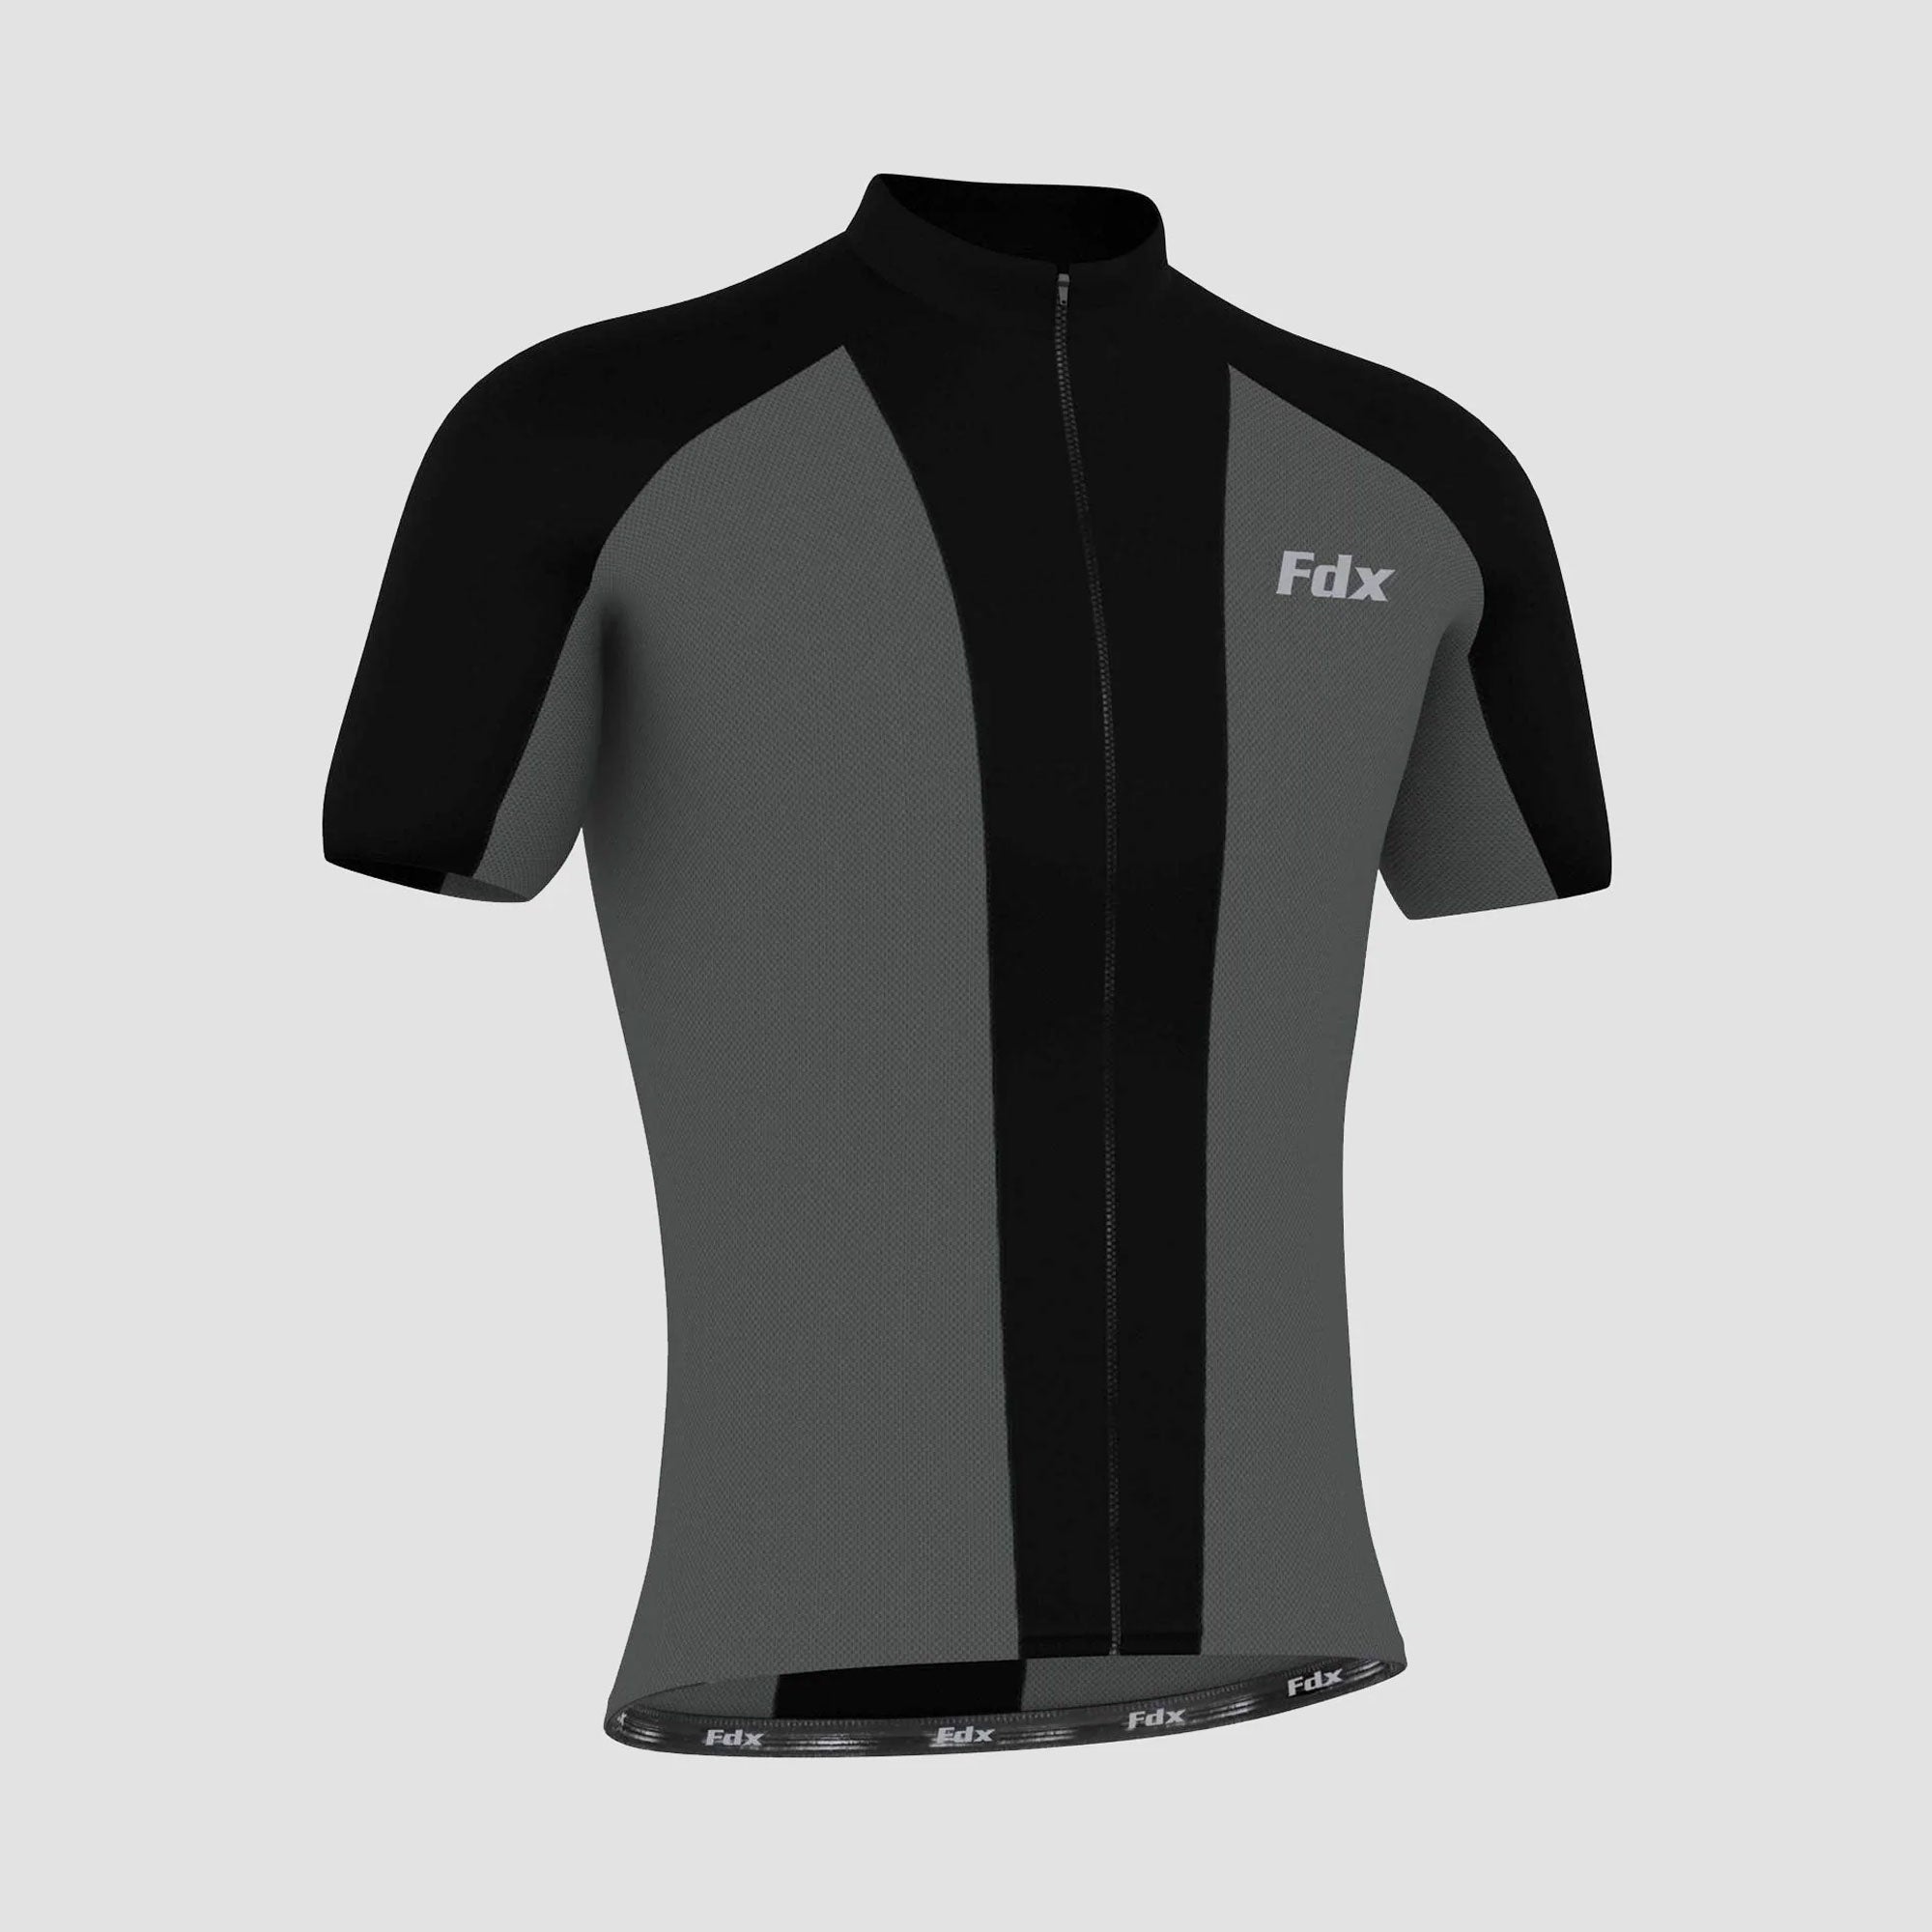 Fdx Mens Black & Grey Short Sleeve Cycling Jersey for Summer Best Road Bike Wear Top Light Weight, Full Zipper, Pockets & Hi-viz Reflectors - Brisk